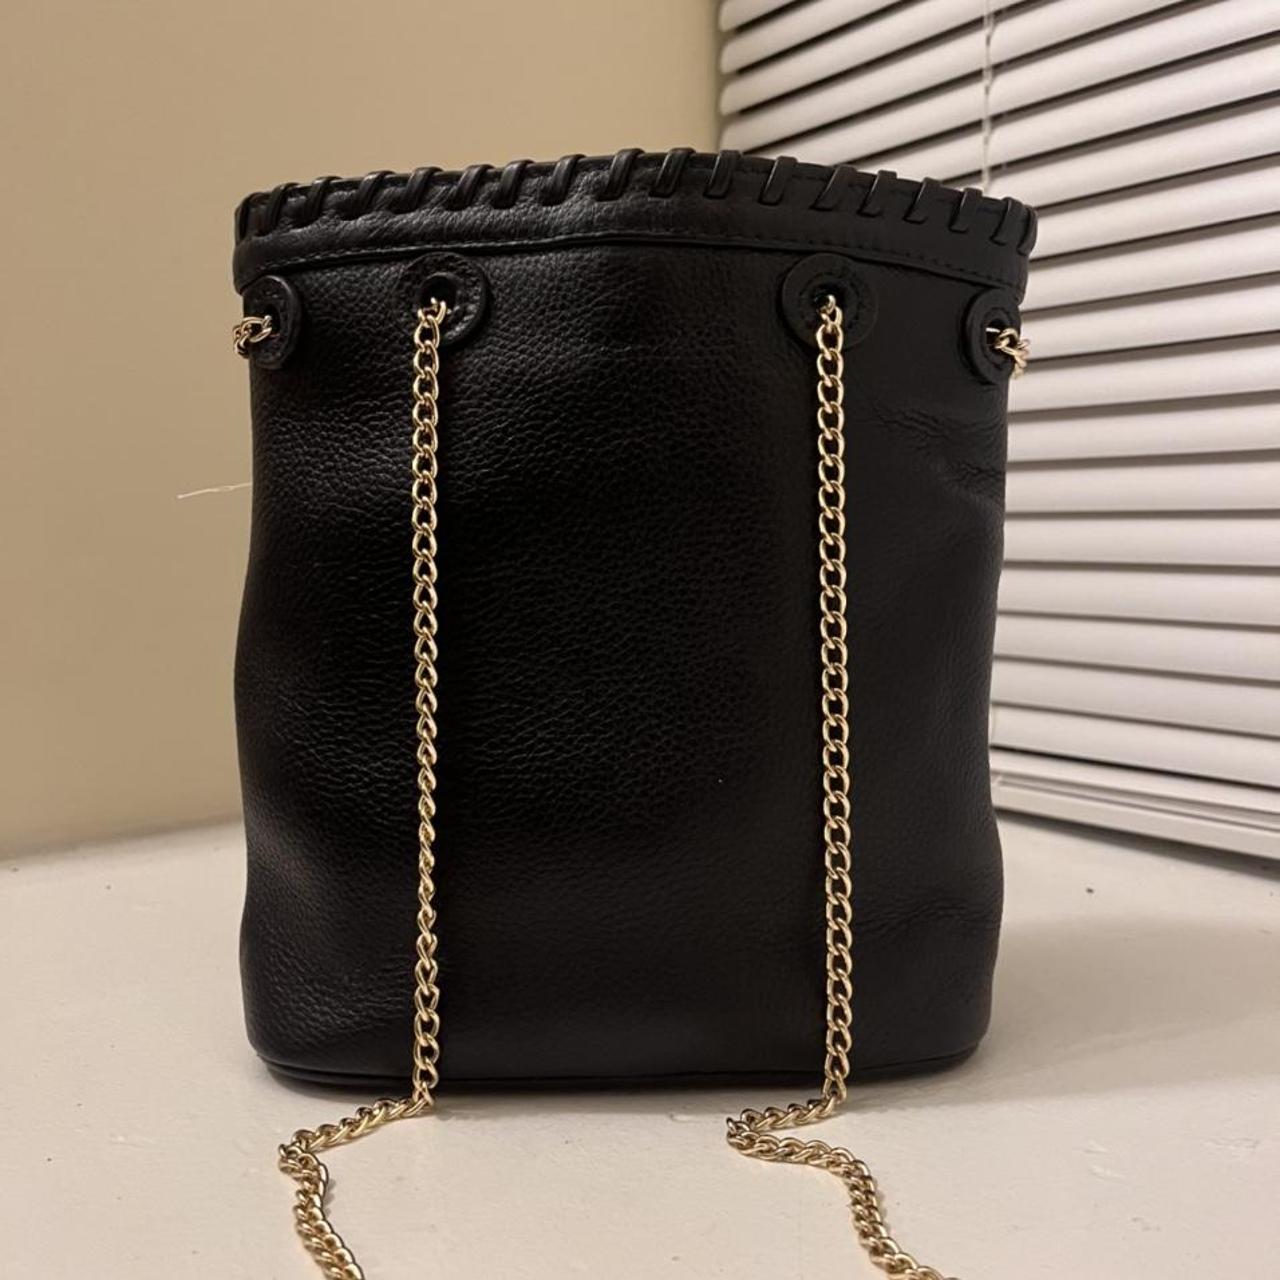 Product Image 3 - Leather Zenith Handbag

Super cute bag